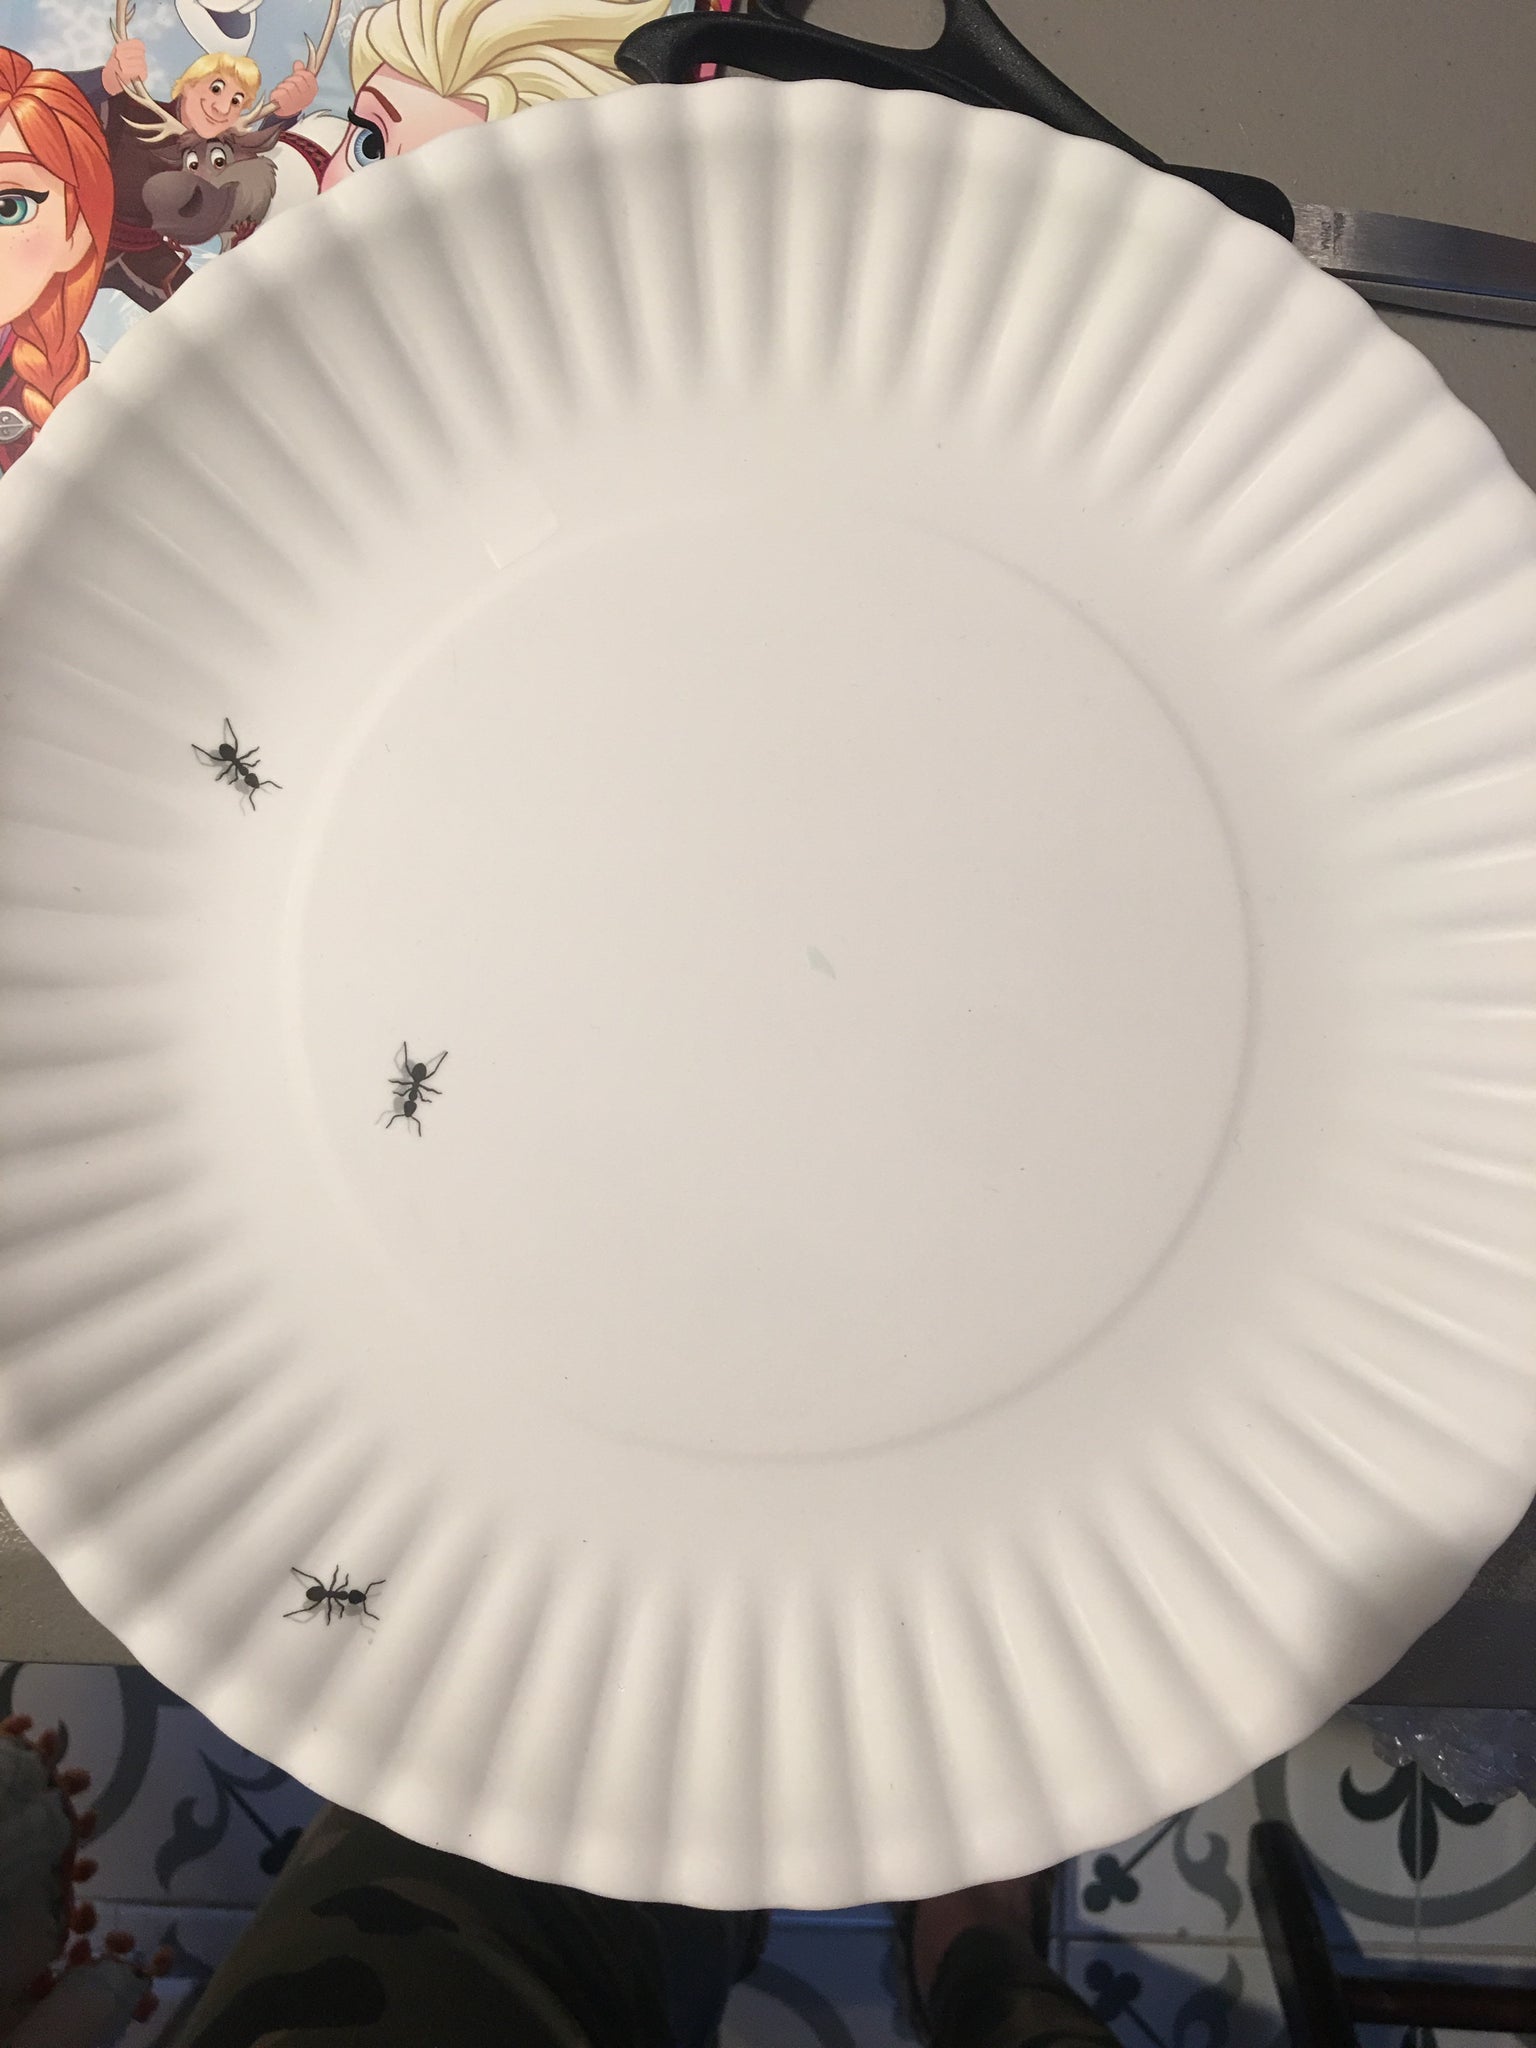 Ant melamine large plate set